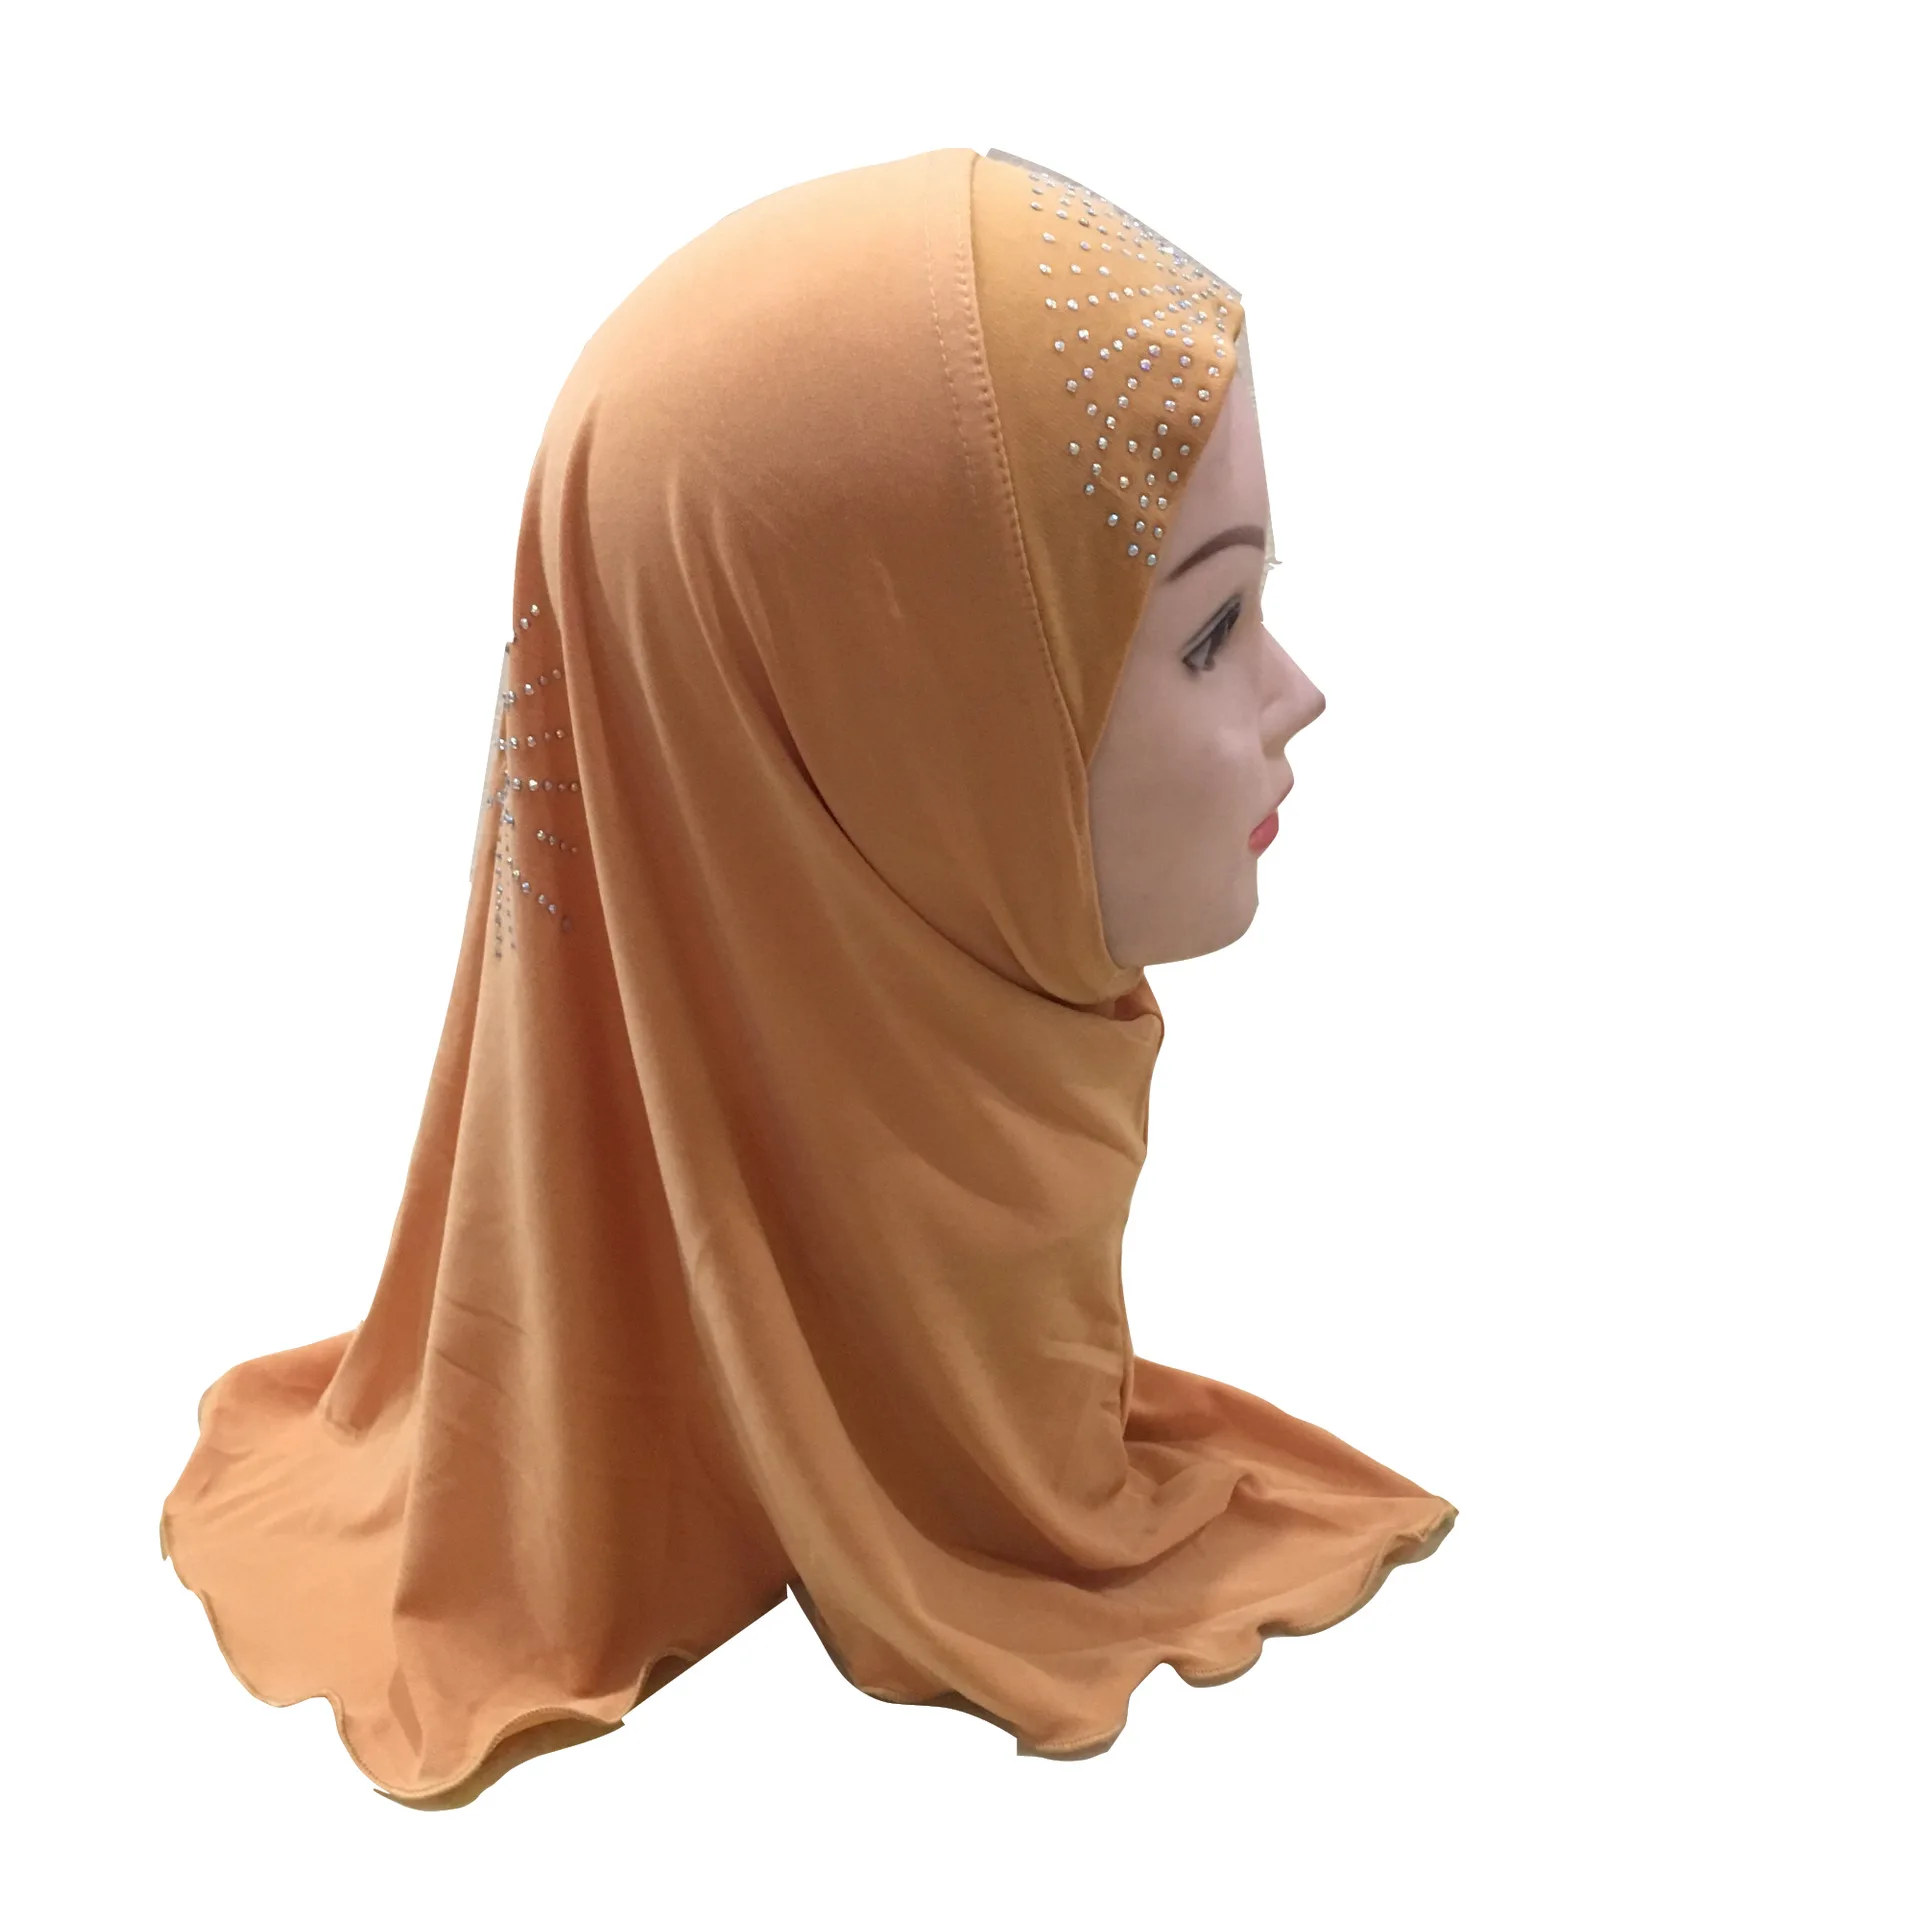 Moslimské Deti Hidžáb šatku Moslimské dievčatá diamanty Šatku Jeden Kus Deti Ramadánu Blízkom Východe Úplné Pokrytie hlavy zábaly hijabs